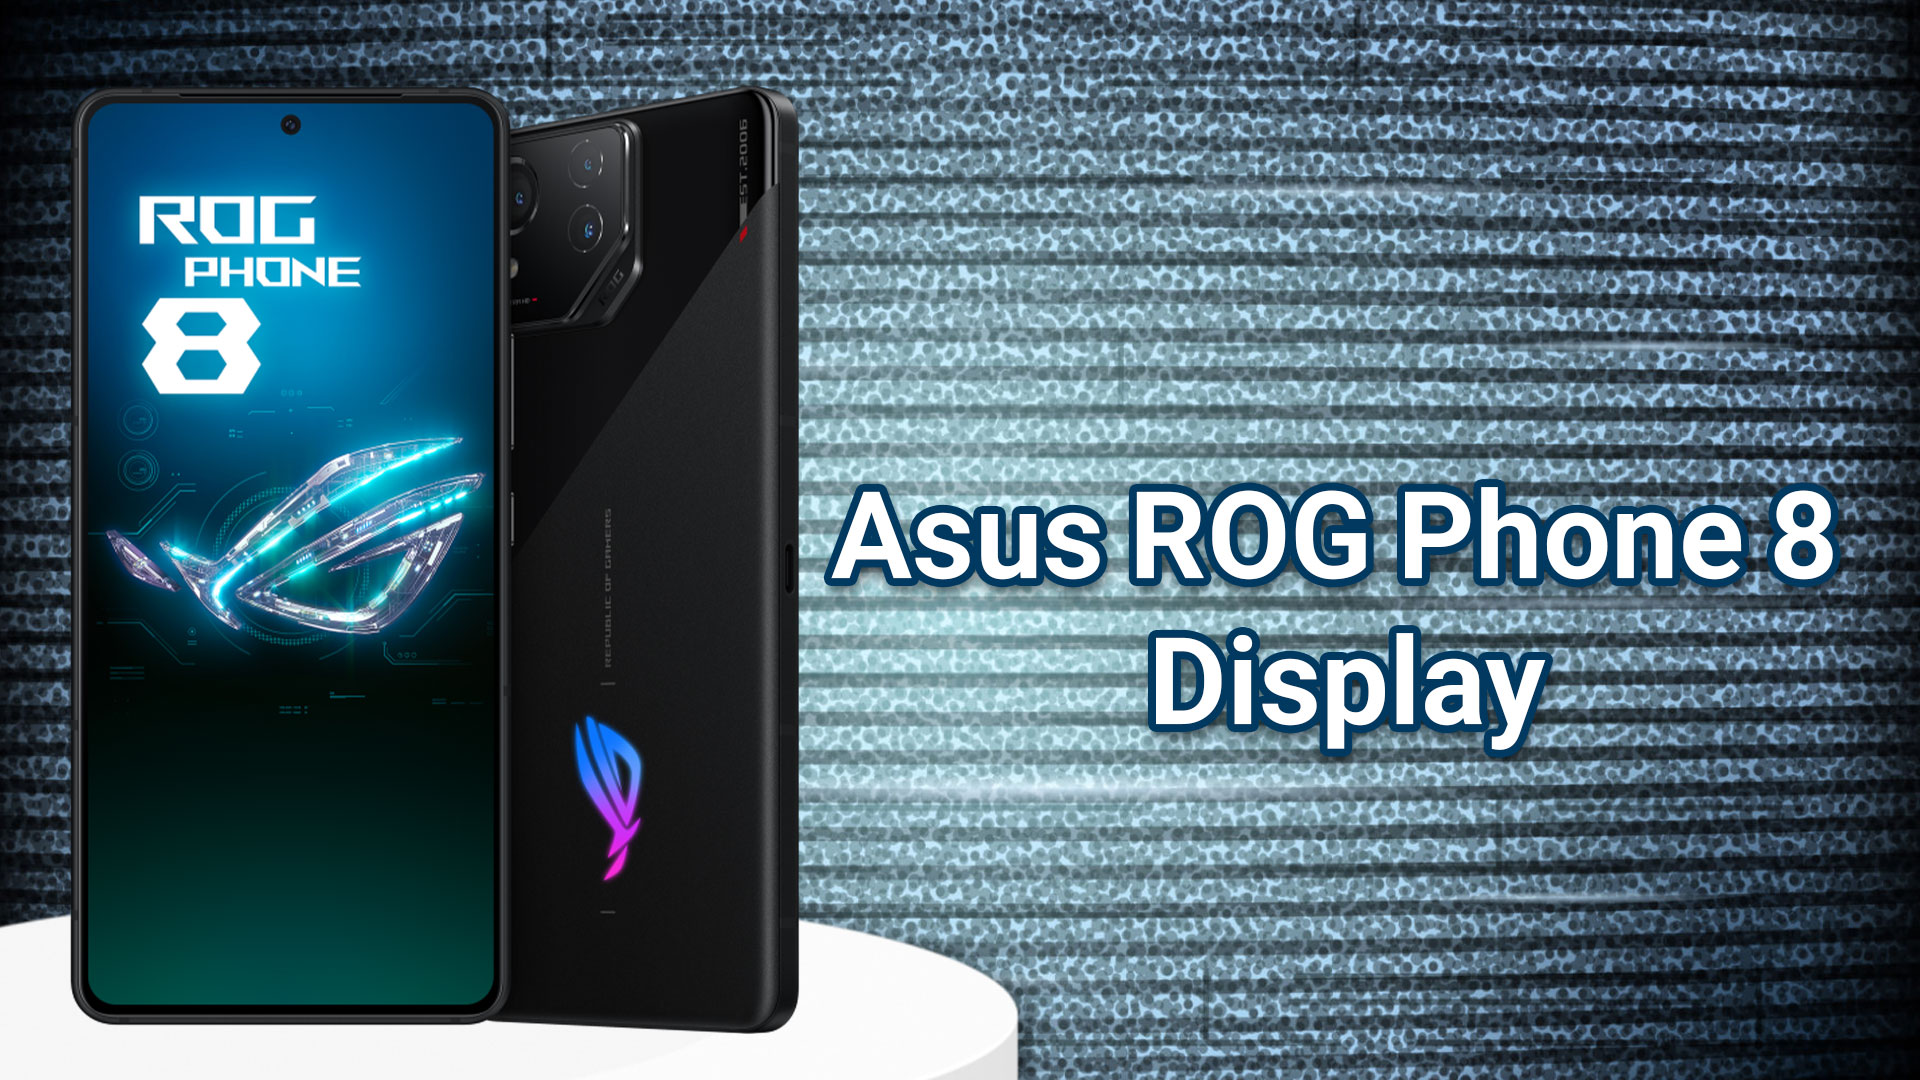 Asus ROG Phone 8
Display 